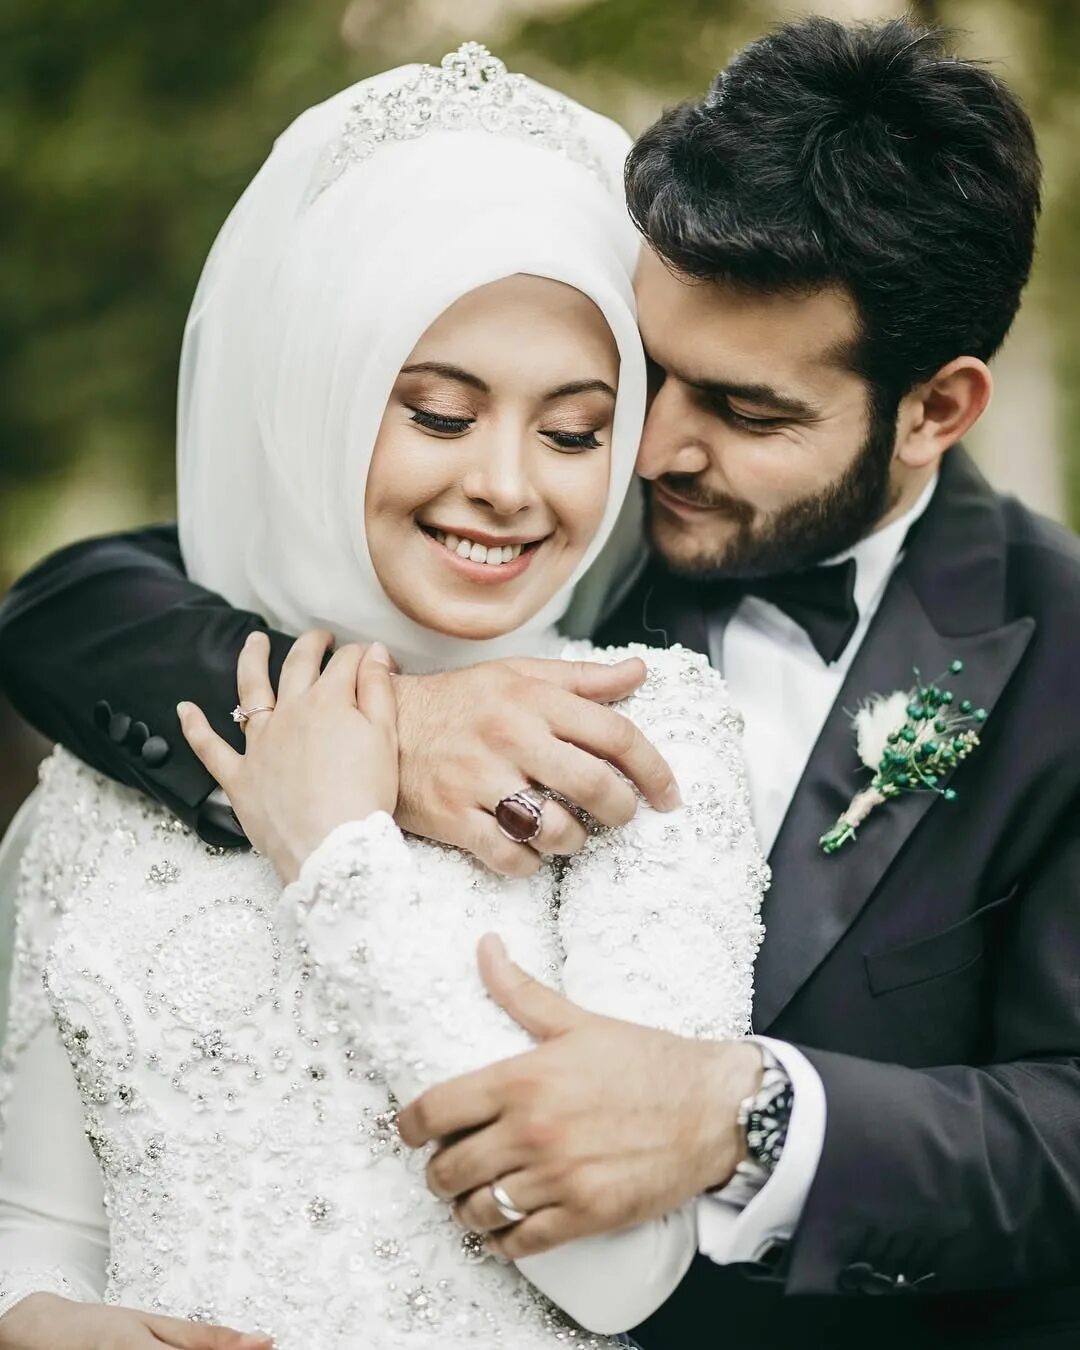 Мусульманские пары картинки. Свадьба мусульман. Мусульманская пара. Мусульманская Свадебная пара. Красивые Свадебные пары мусульман.